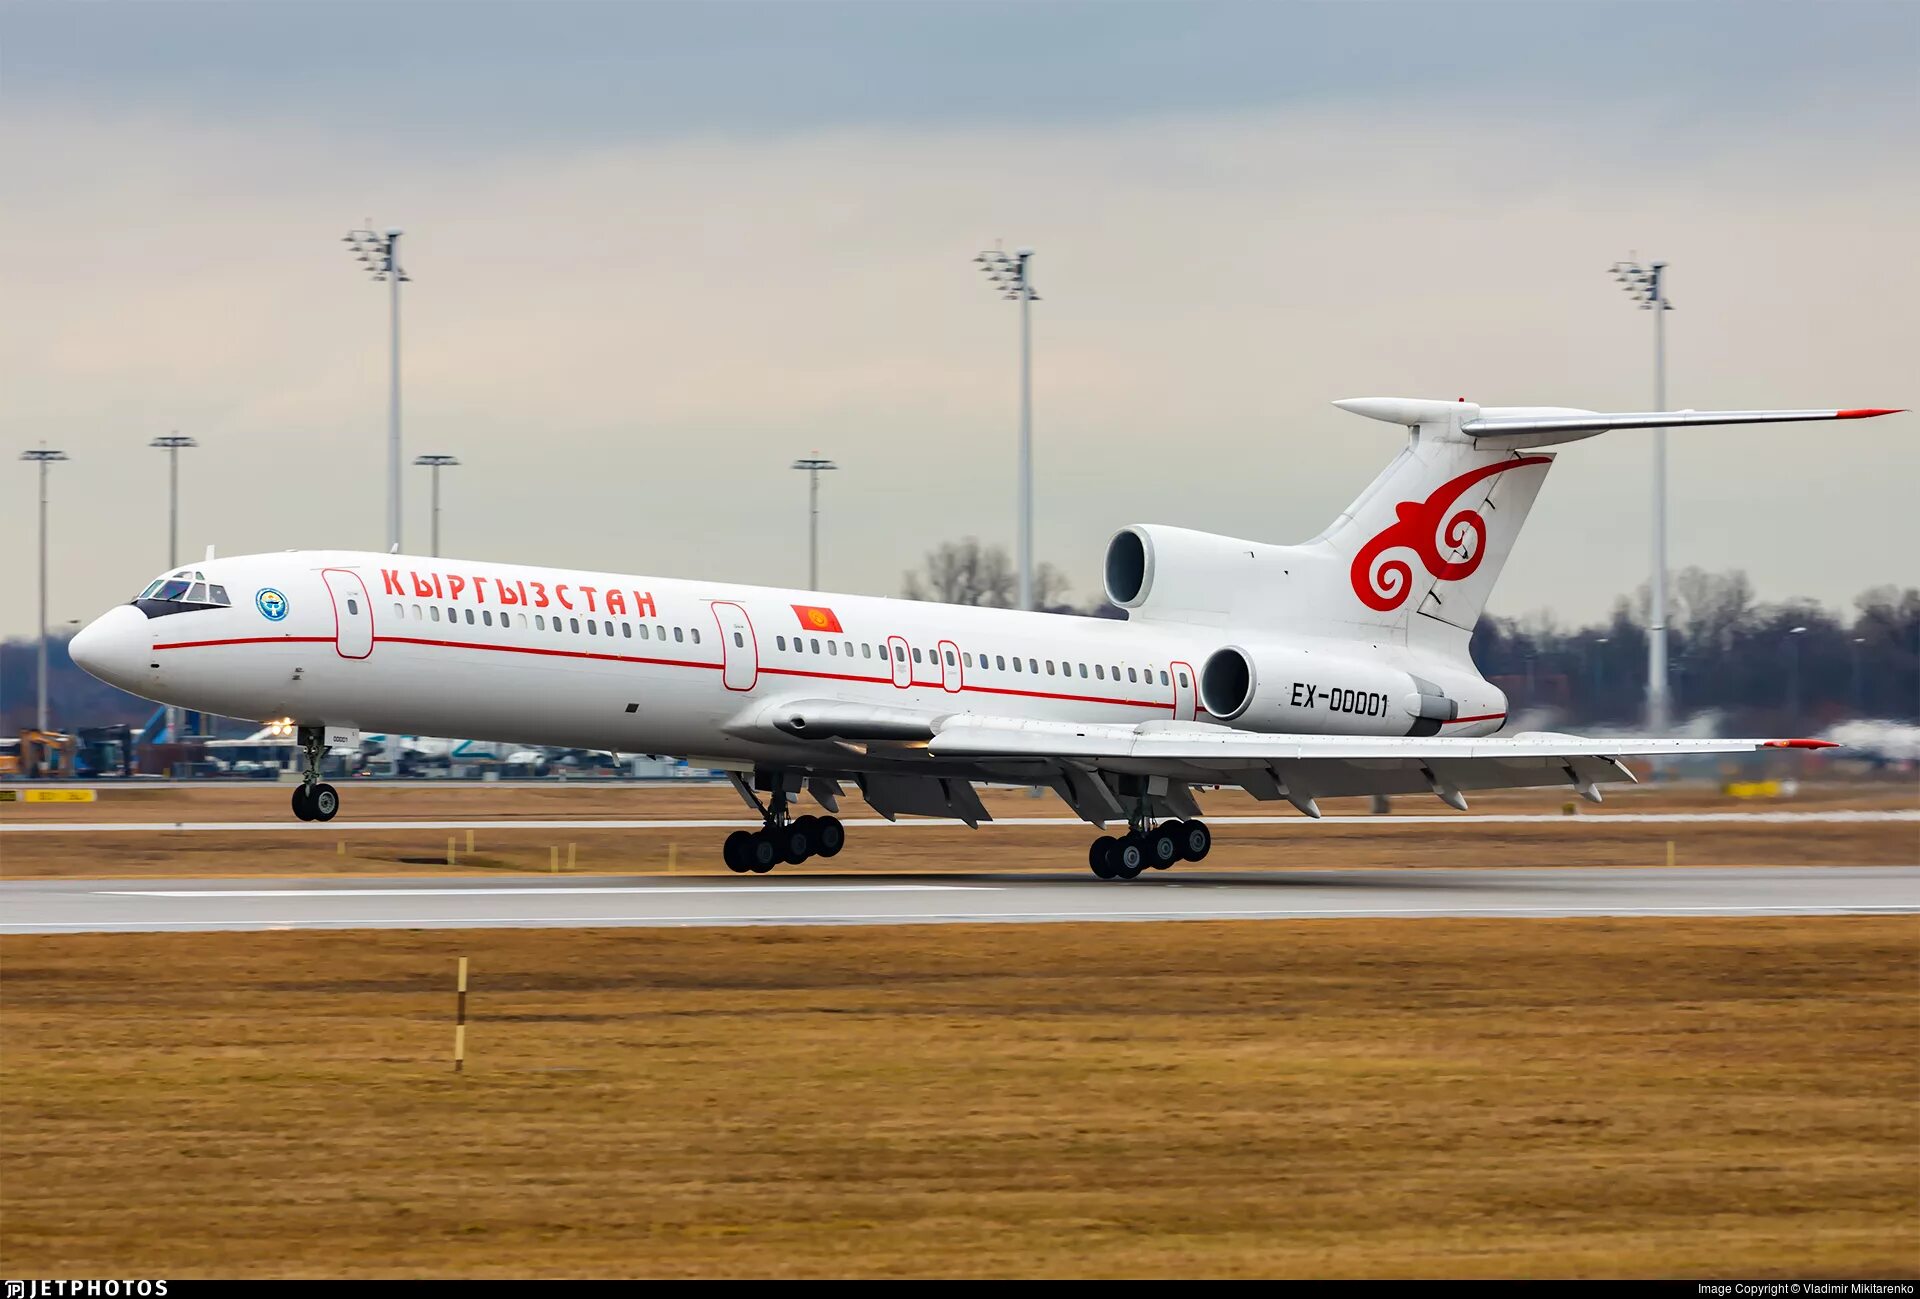 Самолёт президента Киргизии ту-154. Ту-154м президента Кыргызской Республики. Самолет приздиинт Кыргызстан. Борт 1 Киргизии.